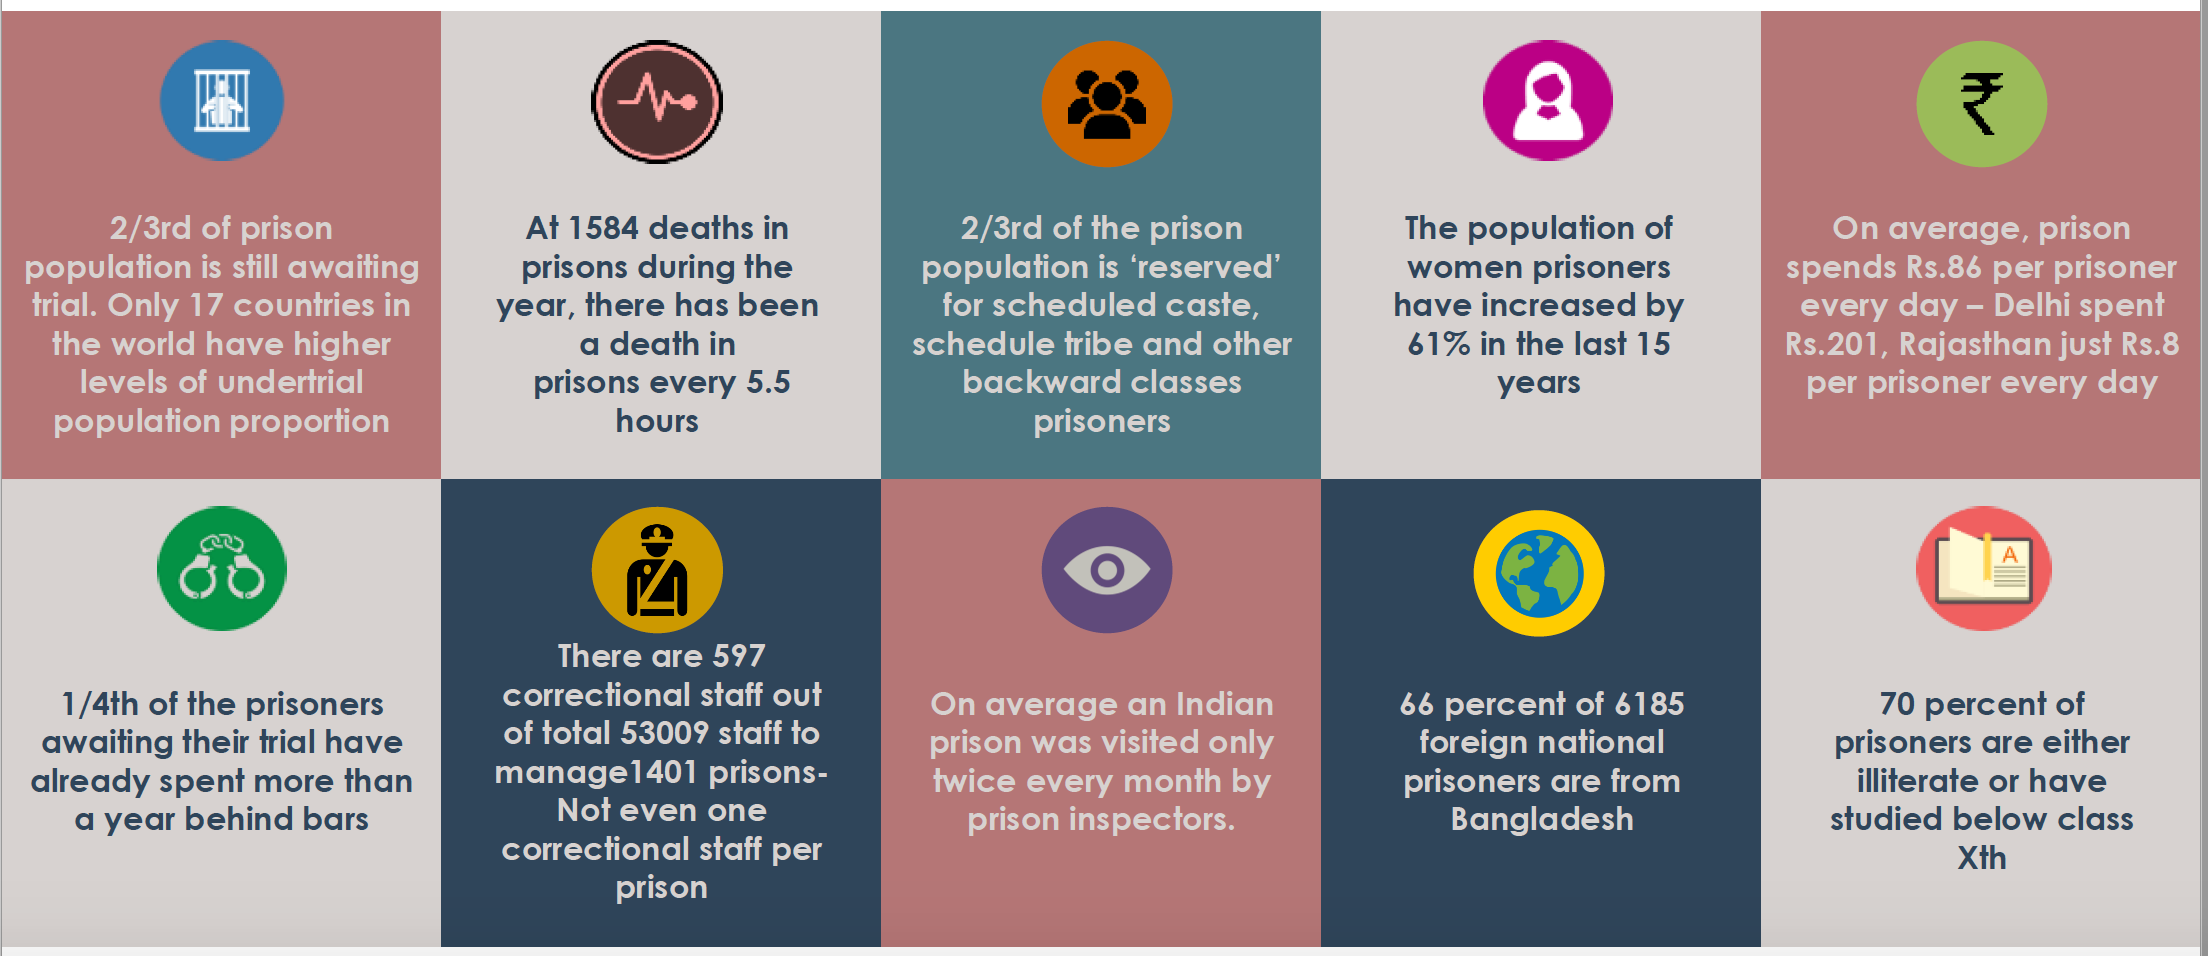 chri-breakdown-on-indian-prison-statistics